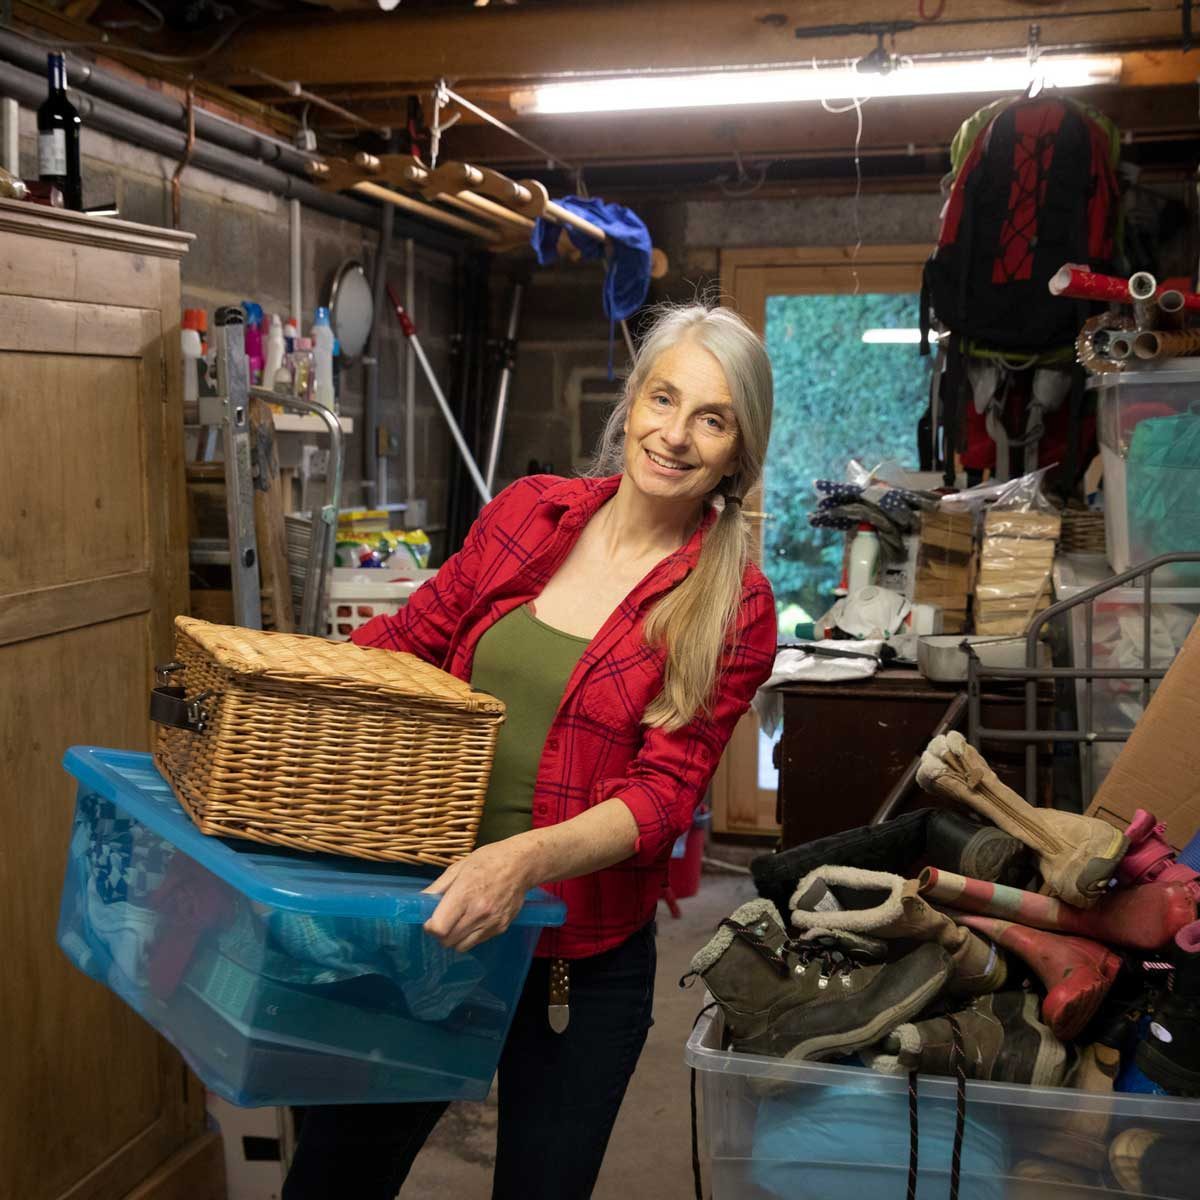 Woman sorting through garage clutter